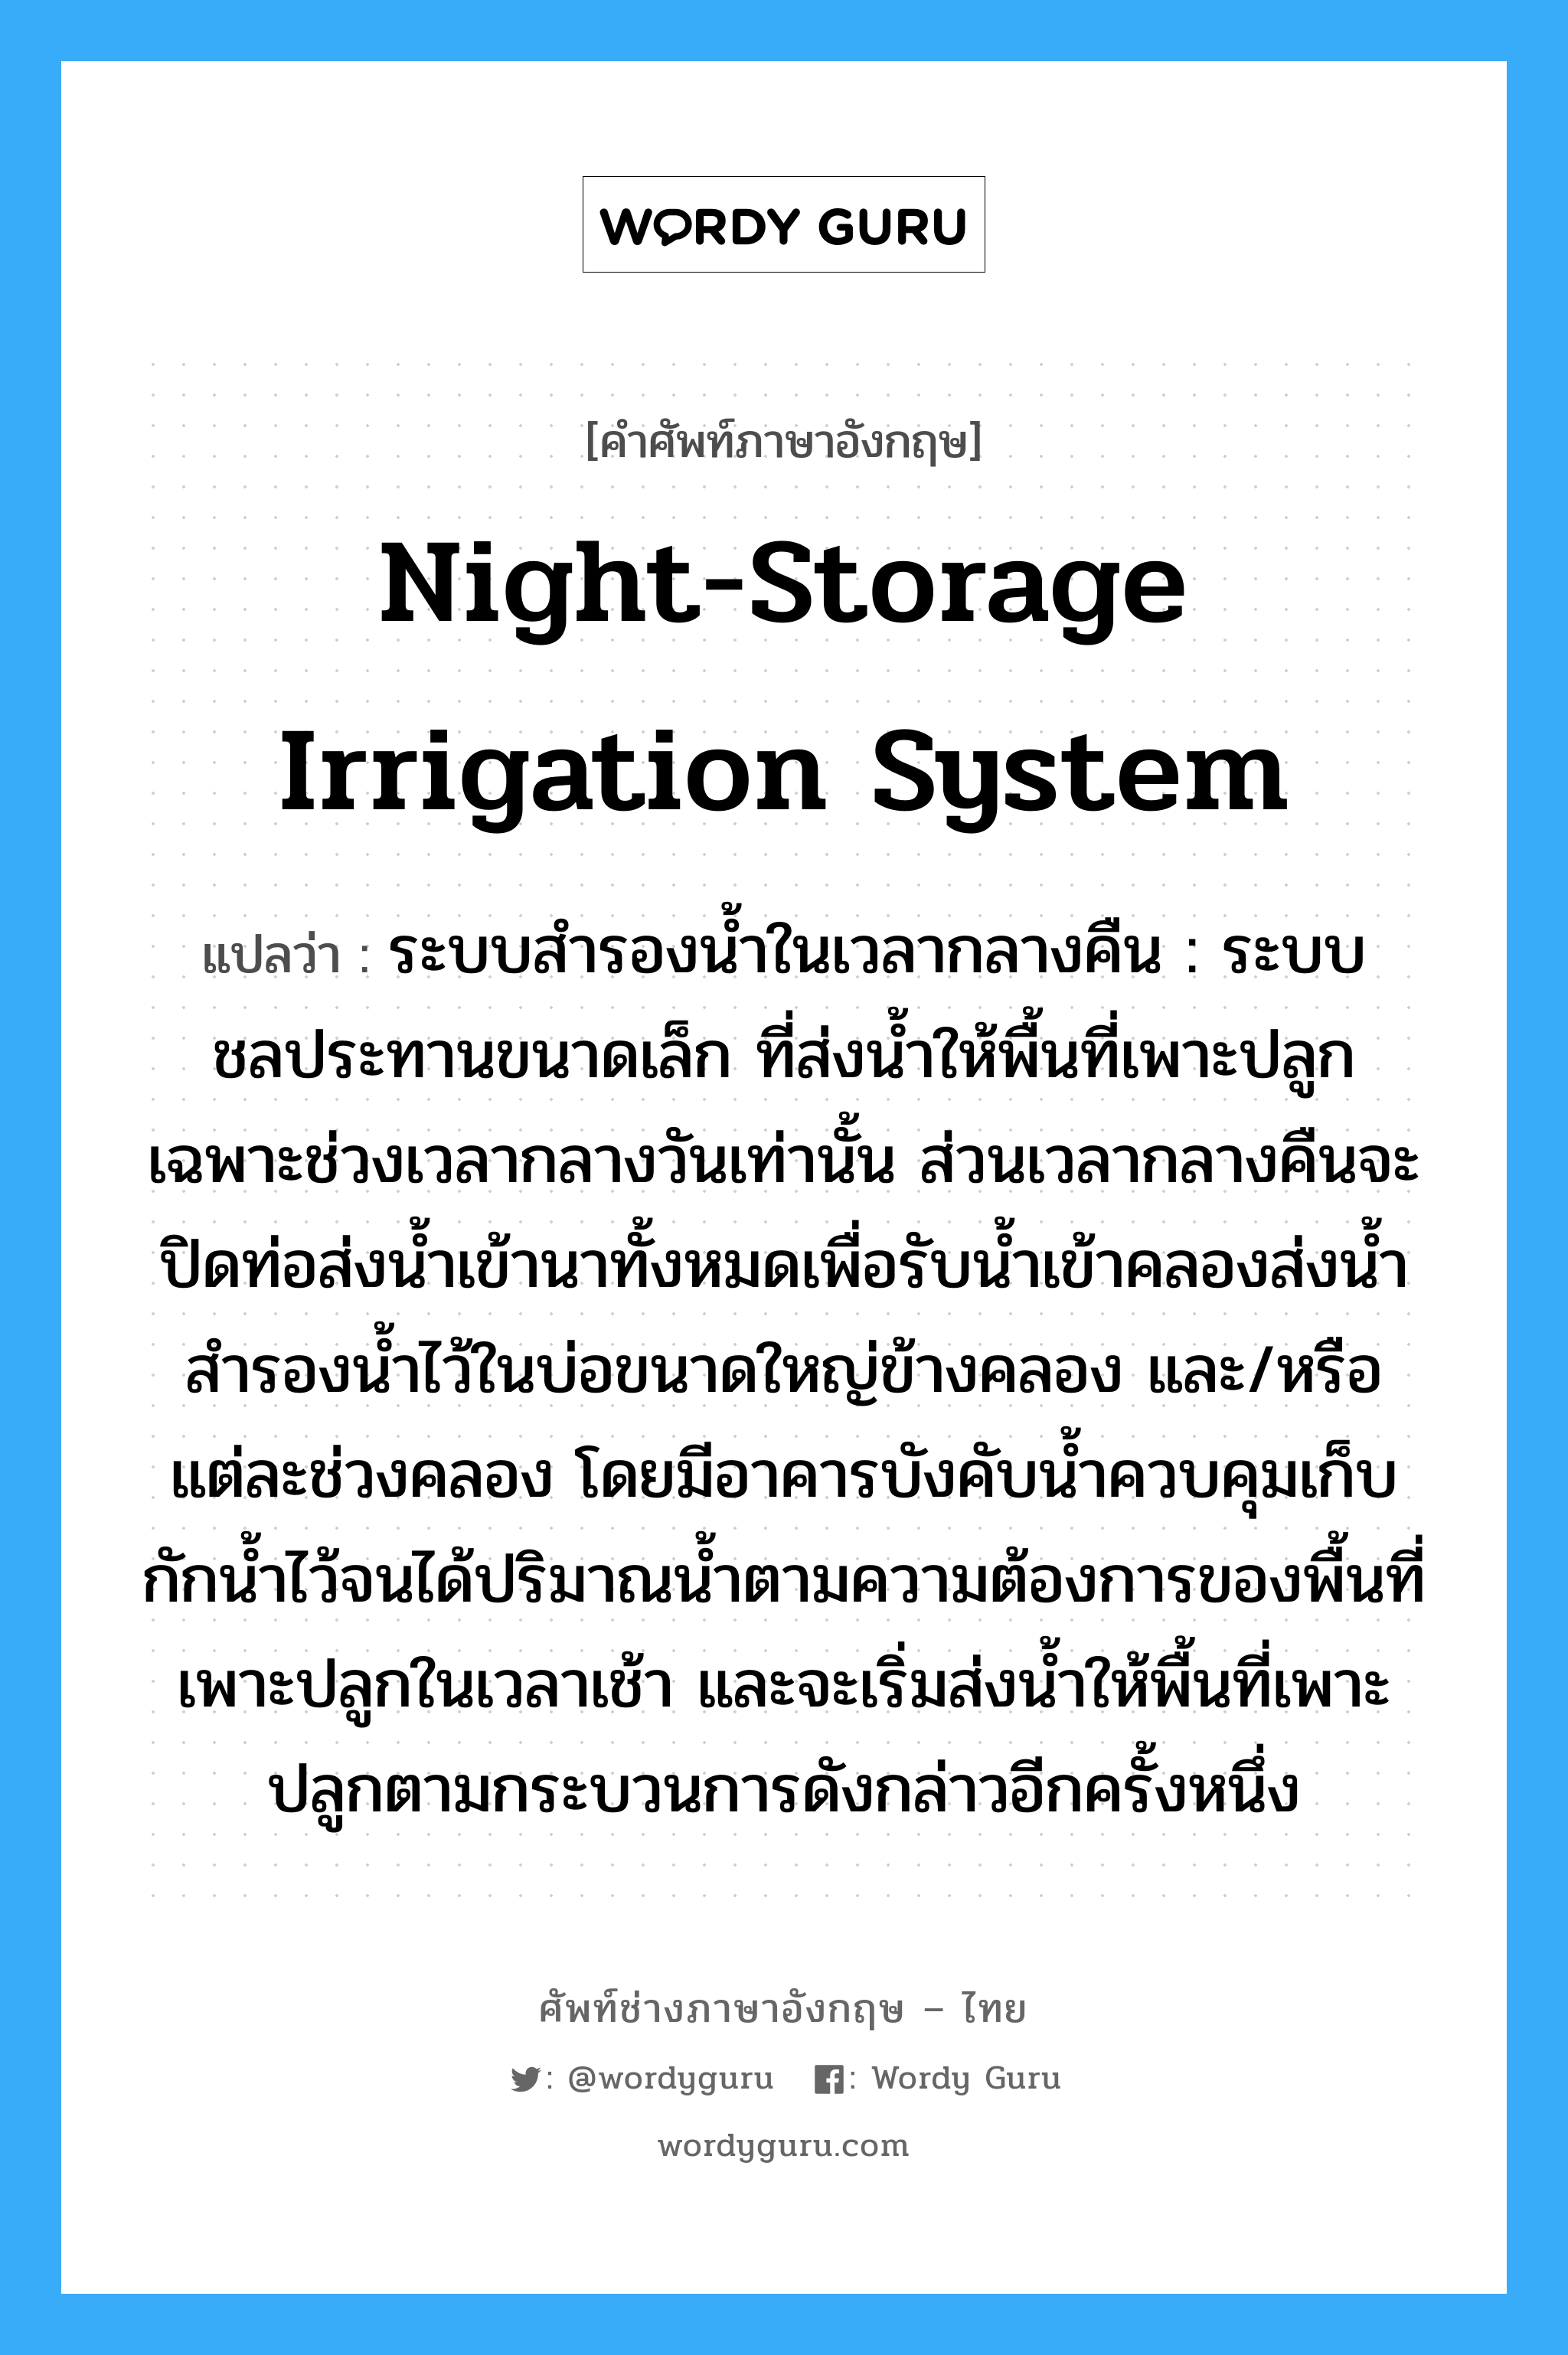 night-storage irrigation system แปลว่า?, คำศัพท์ช่างภาษาอังกฤษ - ไทย night-storage irrigation system คำศัพท์ภาษาอังกฤษ night-storage irrigation system แปลว่า ระบบสำรองน้ำในเวลากลางคืน : ระบบชลประทานขนาดเล็ก ที่ส่งน้ำให้พื้นที่เพาะปลูกเฉพาะช่วงเวลากลางวันเท่านั้น ส่วนเวลากลางคืนจะปิดท่อส่งน้ำเข้านาทั้งหมดเพื่อรับน้ำเข้าคลองส่งน้ำ สำรองน้ำไว้ในบ่อขนาดใหญ่ข้างคลอง และ/หรือแต่ละช่วงคลอง โดยมีอาคารบังคับน้ำควบคุมเก็บกักน้ำไว้จนได้ปริมาณน้ำตามความต้องการของพื้นที่เพาะปลูกในเวลาเช้า และจะเริ่มส่งน้ำให้พื้นที่เพาะปลูกตามกระบวนการดังกล่าวอีกครั้งหนึ่ง